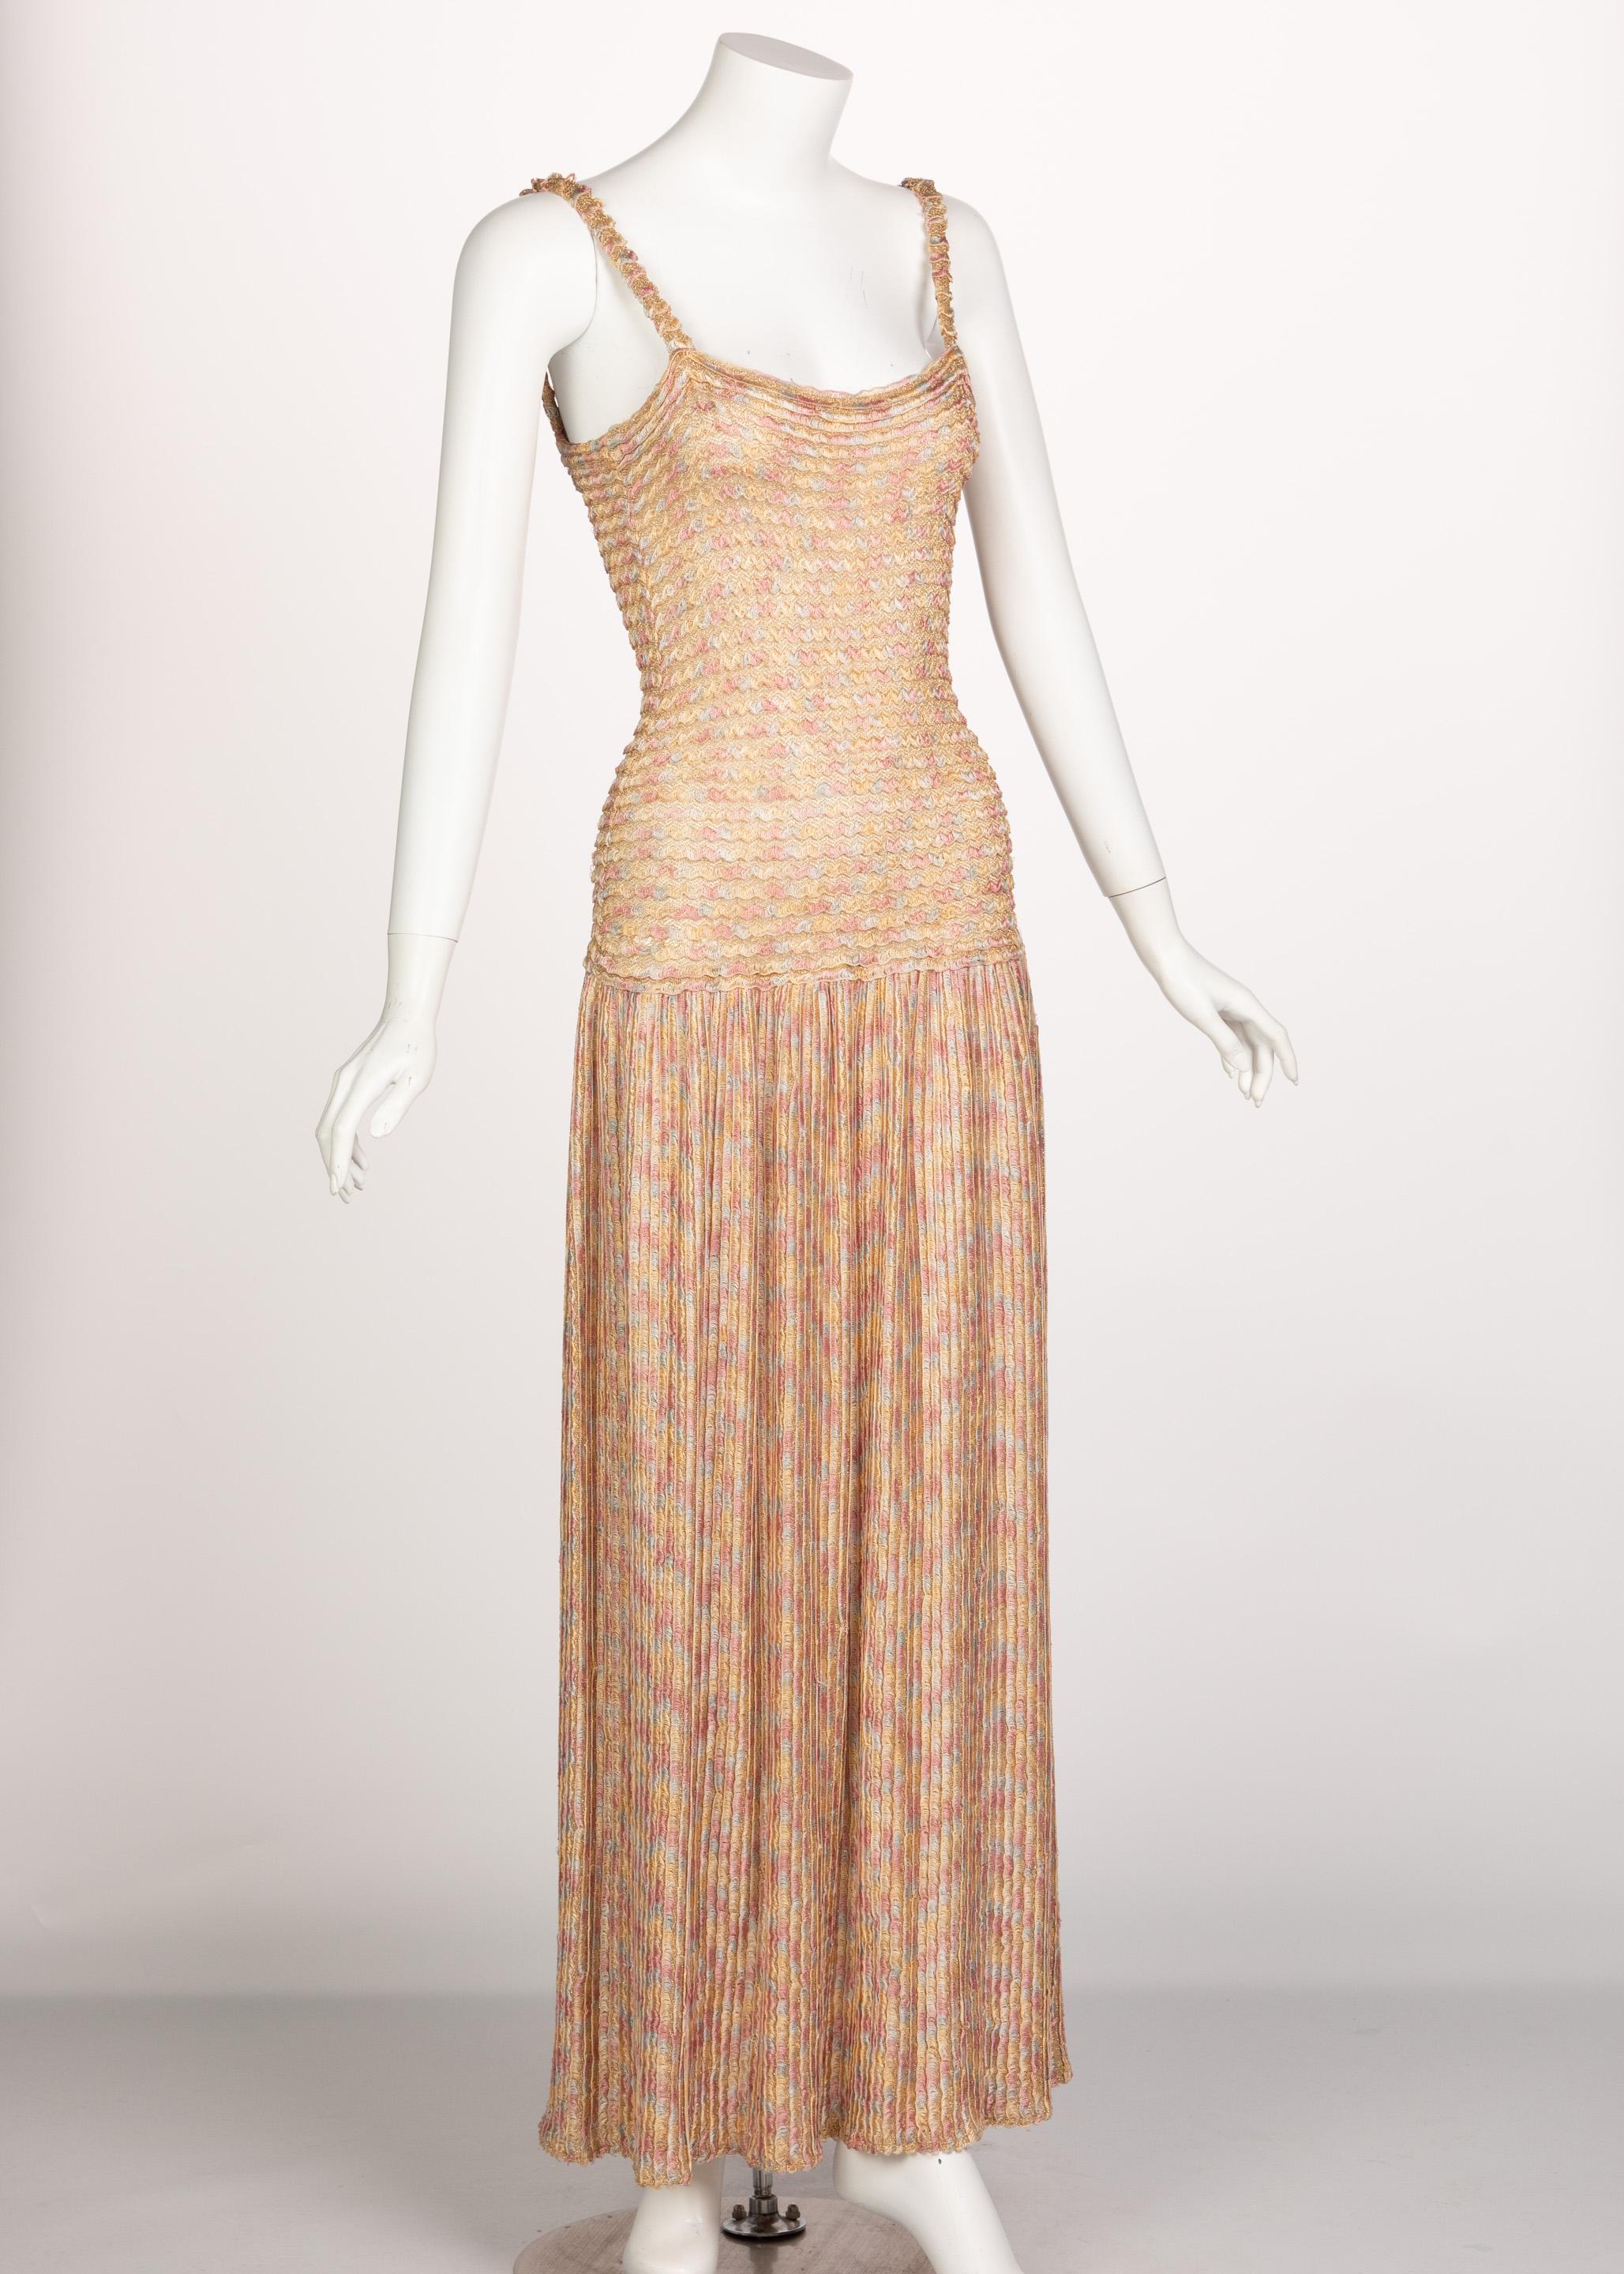 Missoni Pink Gold Knit Maxi Dress Cardigan Necklace Beret Set, 1970s For Sale 3